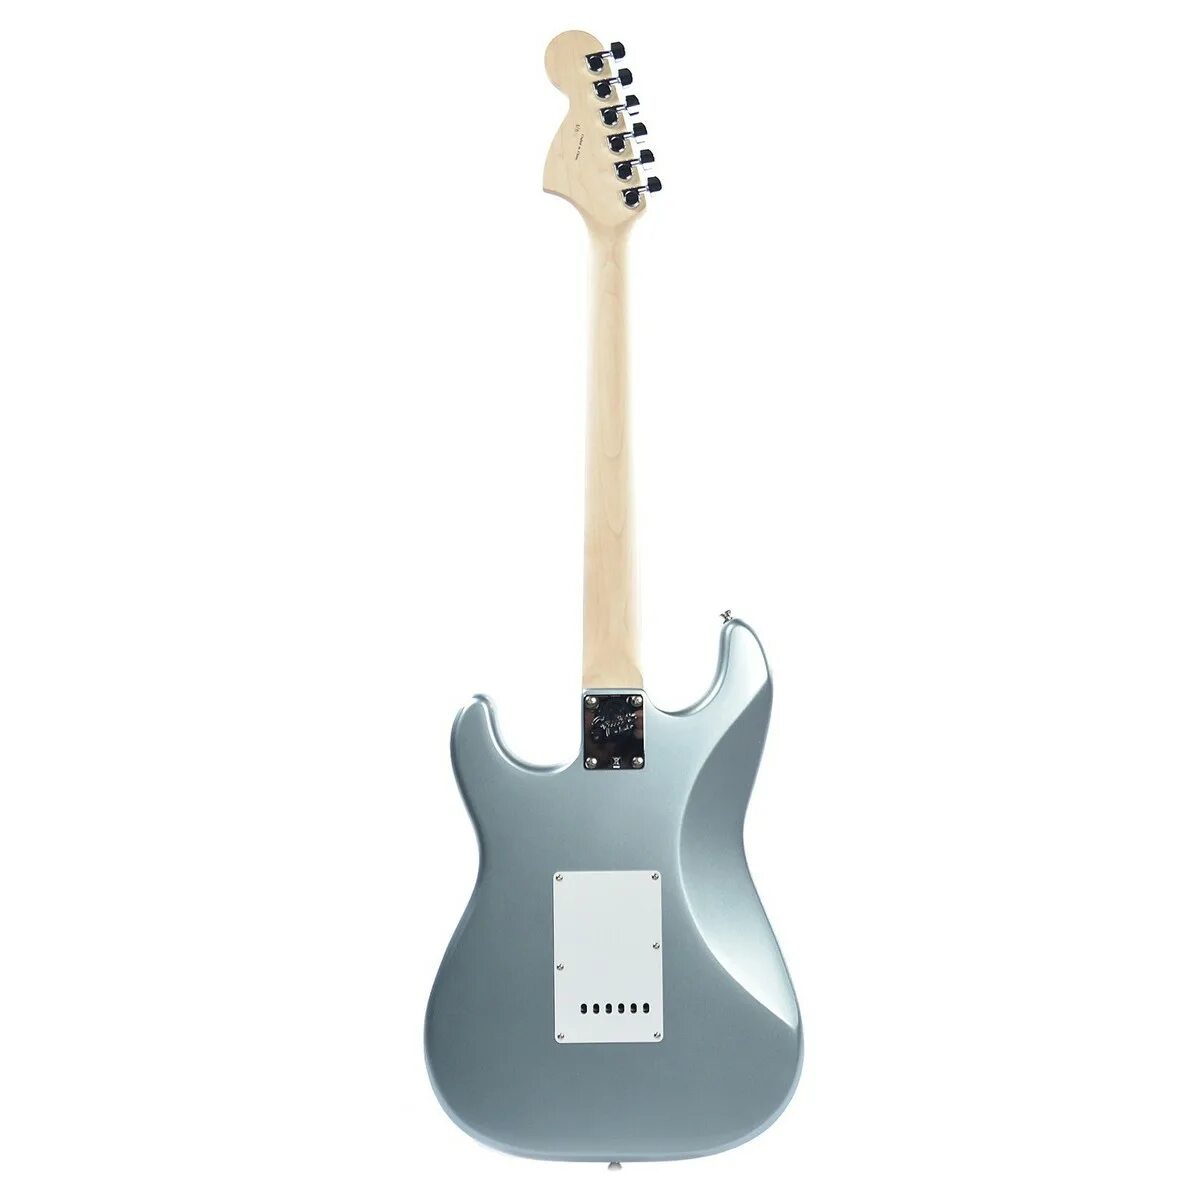 Fender Stratocaster серебристый. Электрогитара Fender Squier Telecaster Affinity SS 2016 года. Гитара серебристая. Squier Silver Series Catalouge.